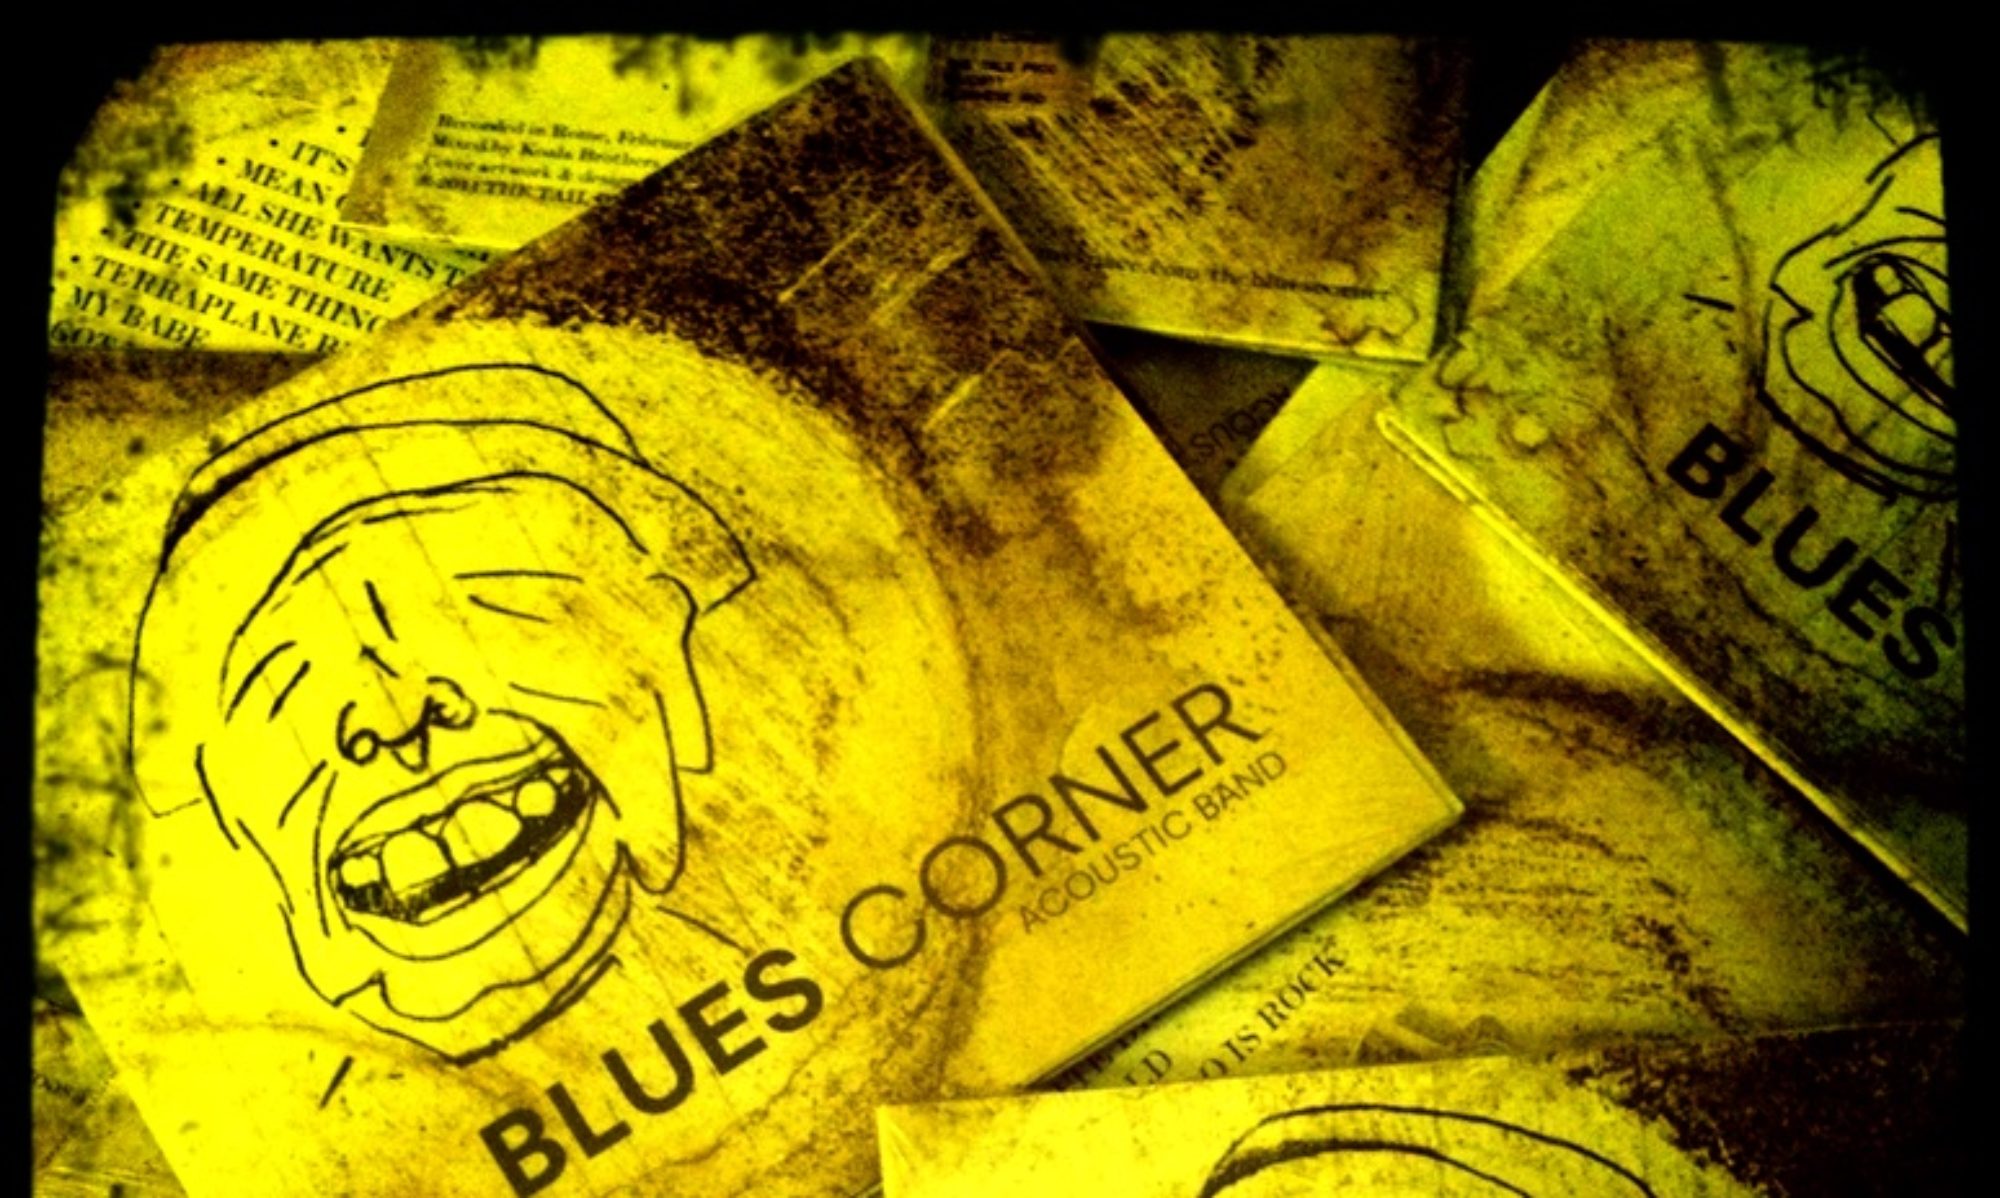 Blues Corner